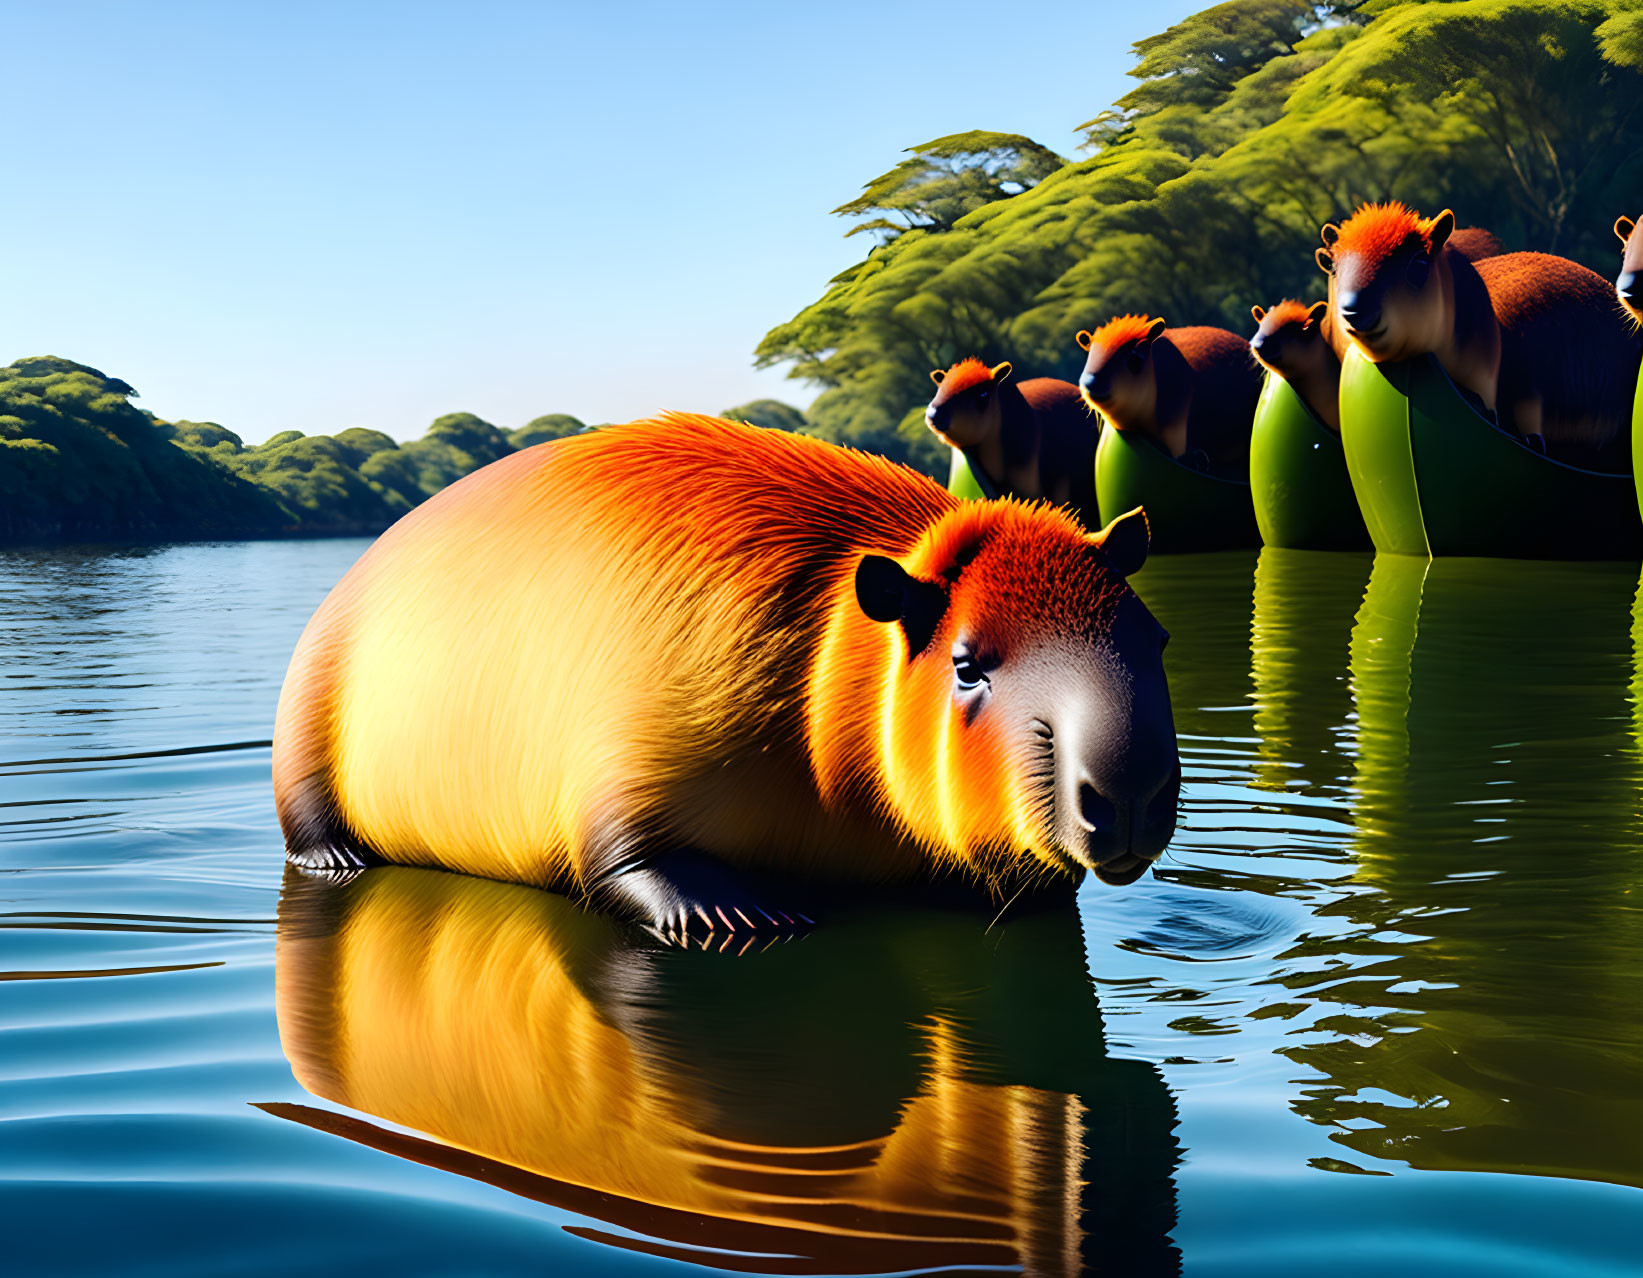 Vibrant orange and yellow capybara in surreal landscape